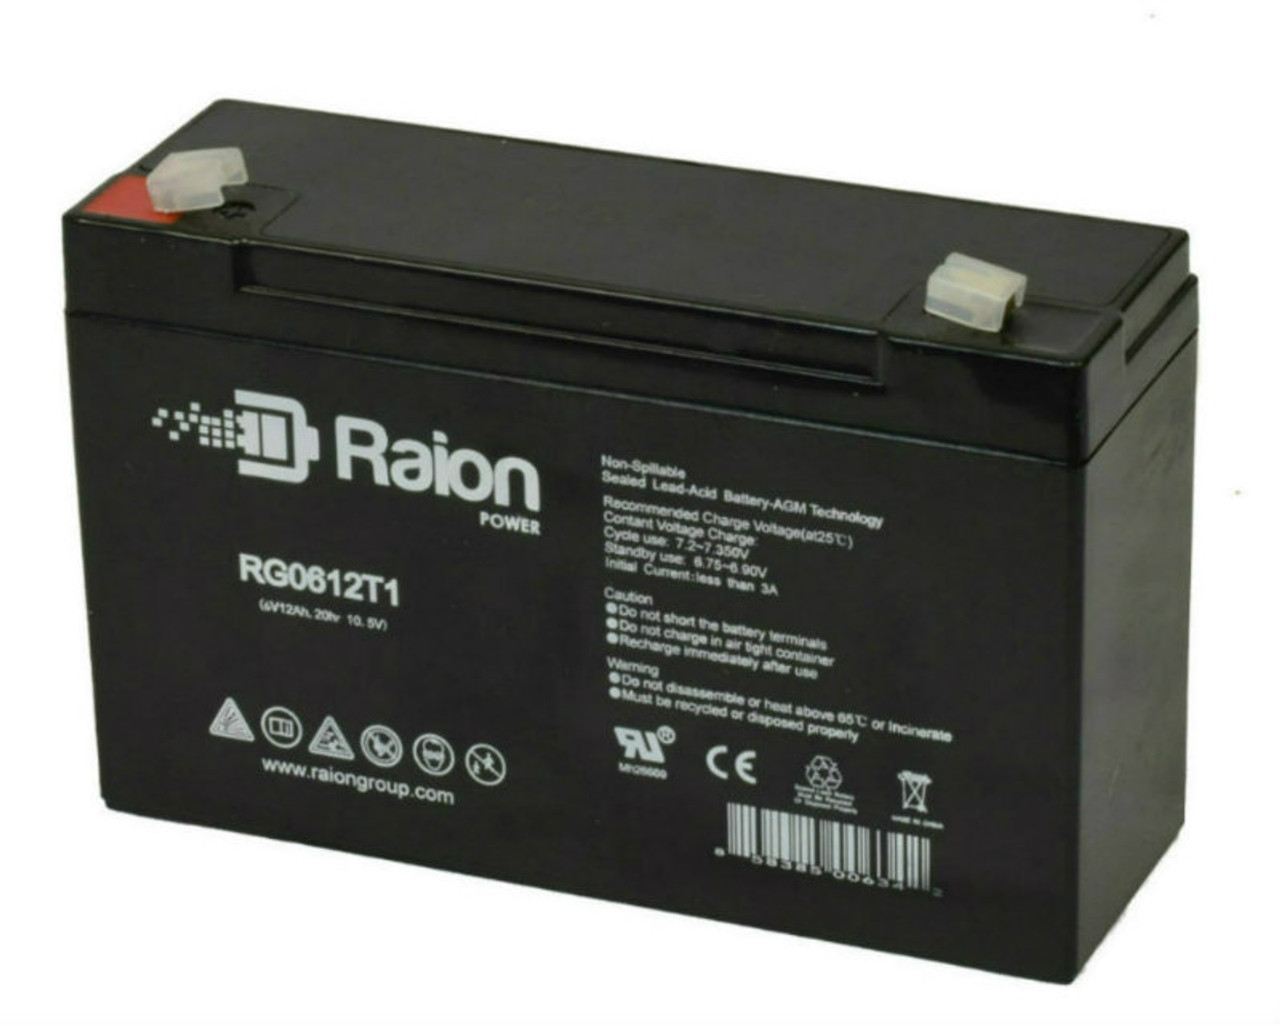 Raion Power RG06120T1 Replacement Emergency Light Battery for Sonnenschein SRB6V10